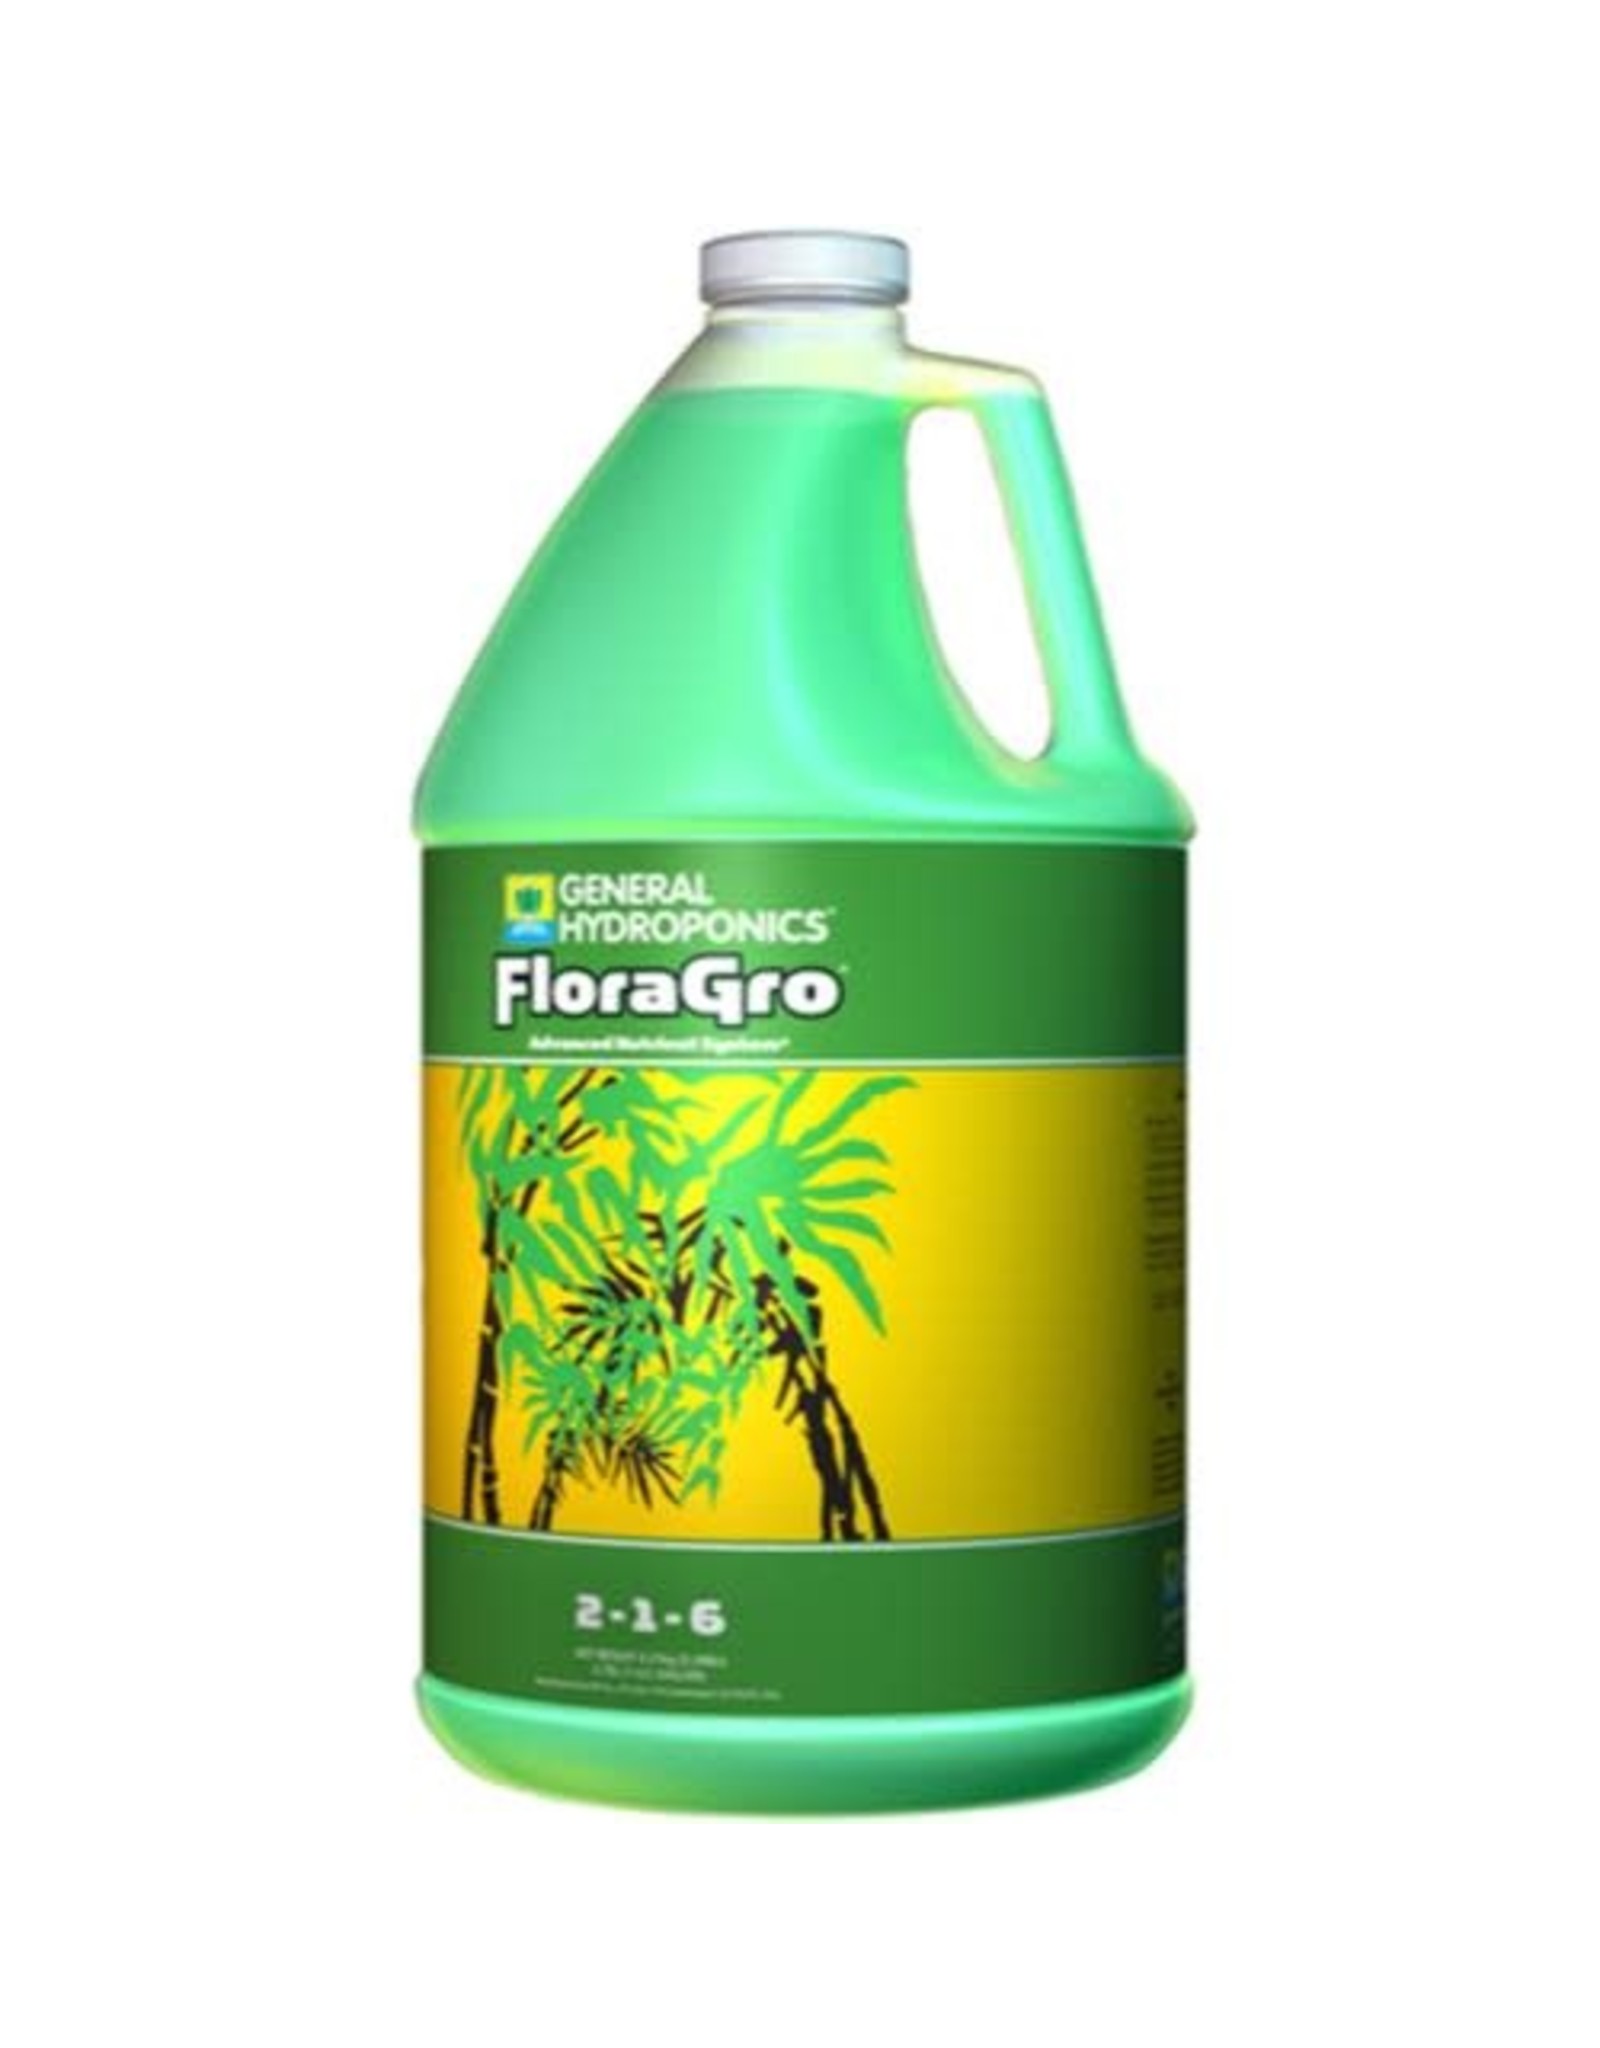 General Hydroponics GH Flora Gro Gallon